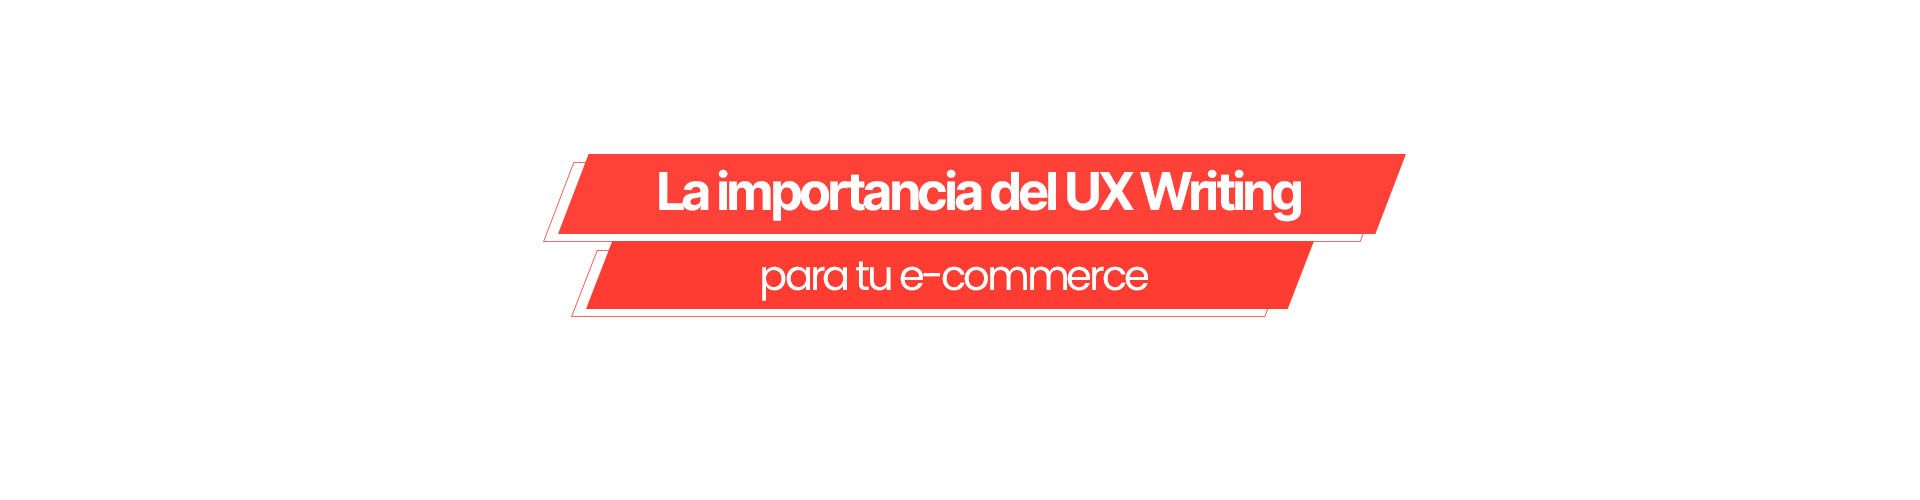 ux writing ecommerce La importancia del UX Writing para tu e-commerce